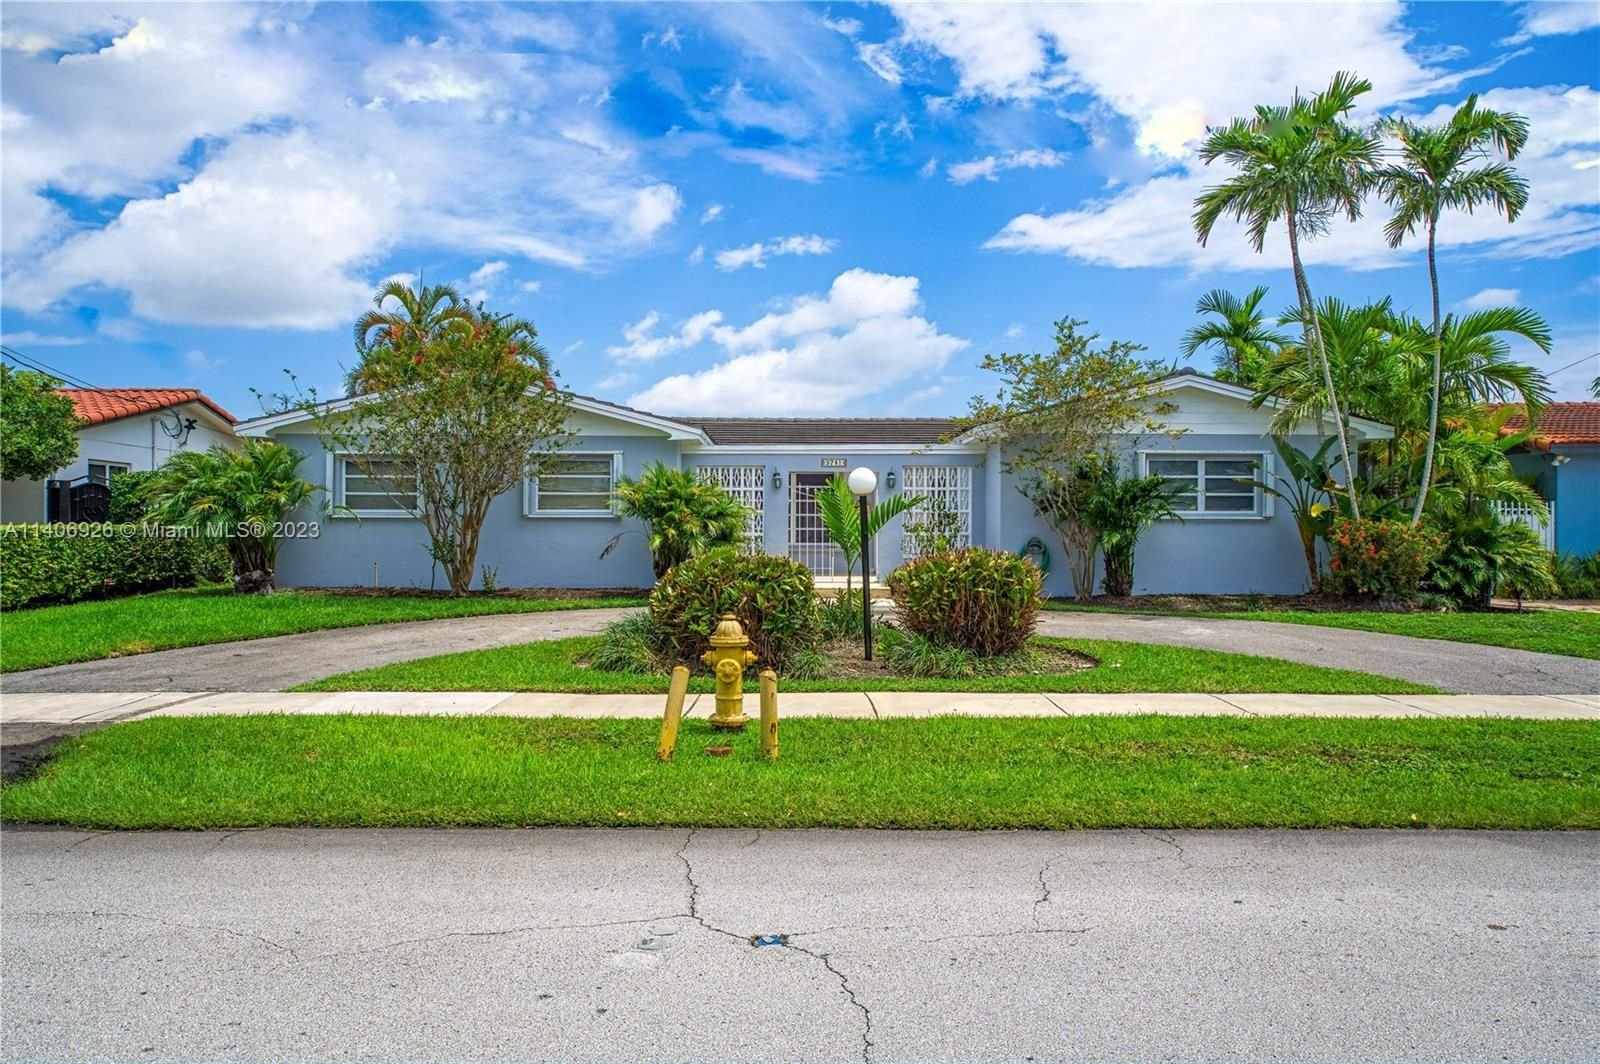 Real estate property located at 9741 20th St, Miami-Dade County, Miami, FL